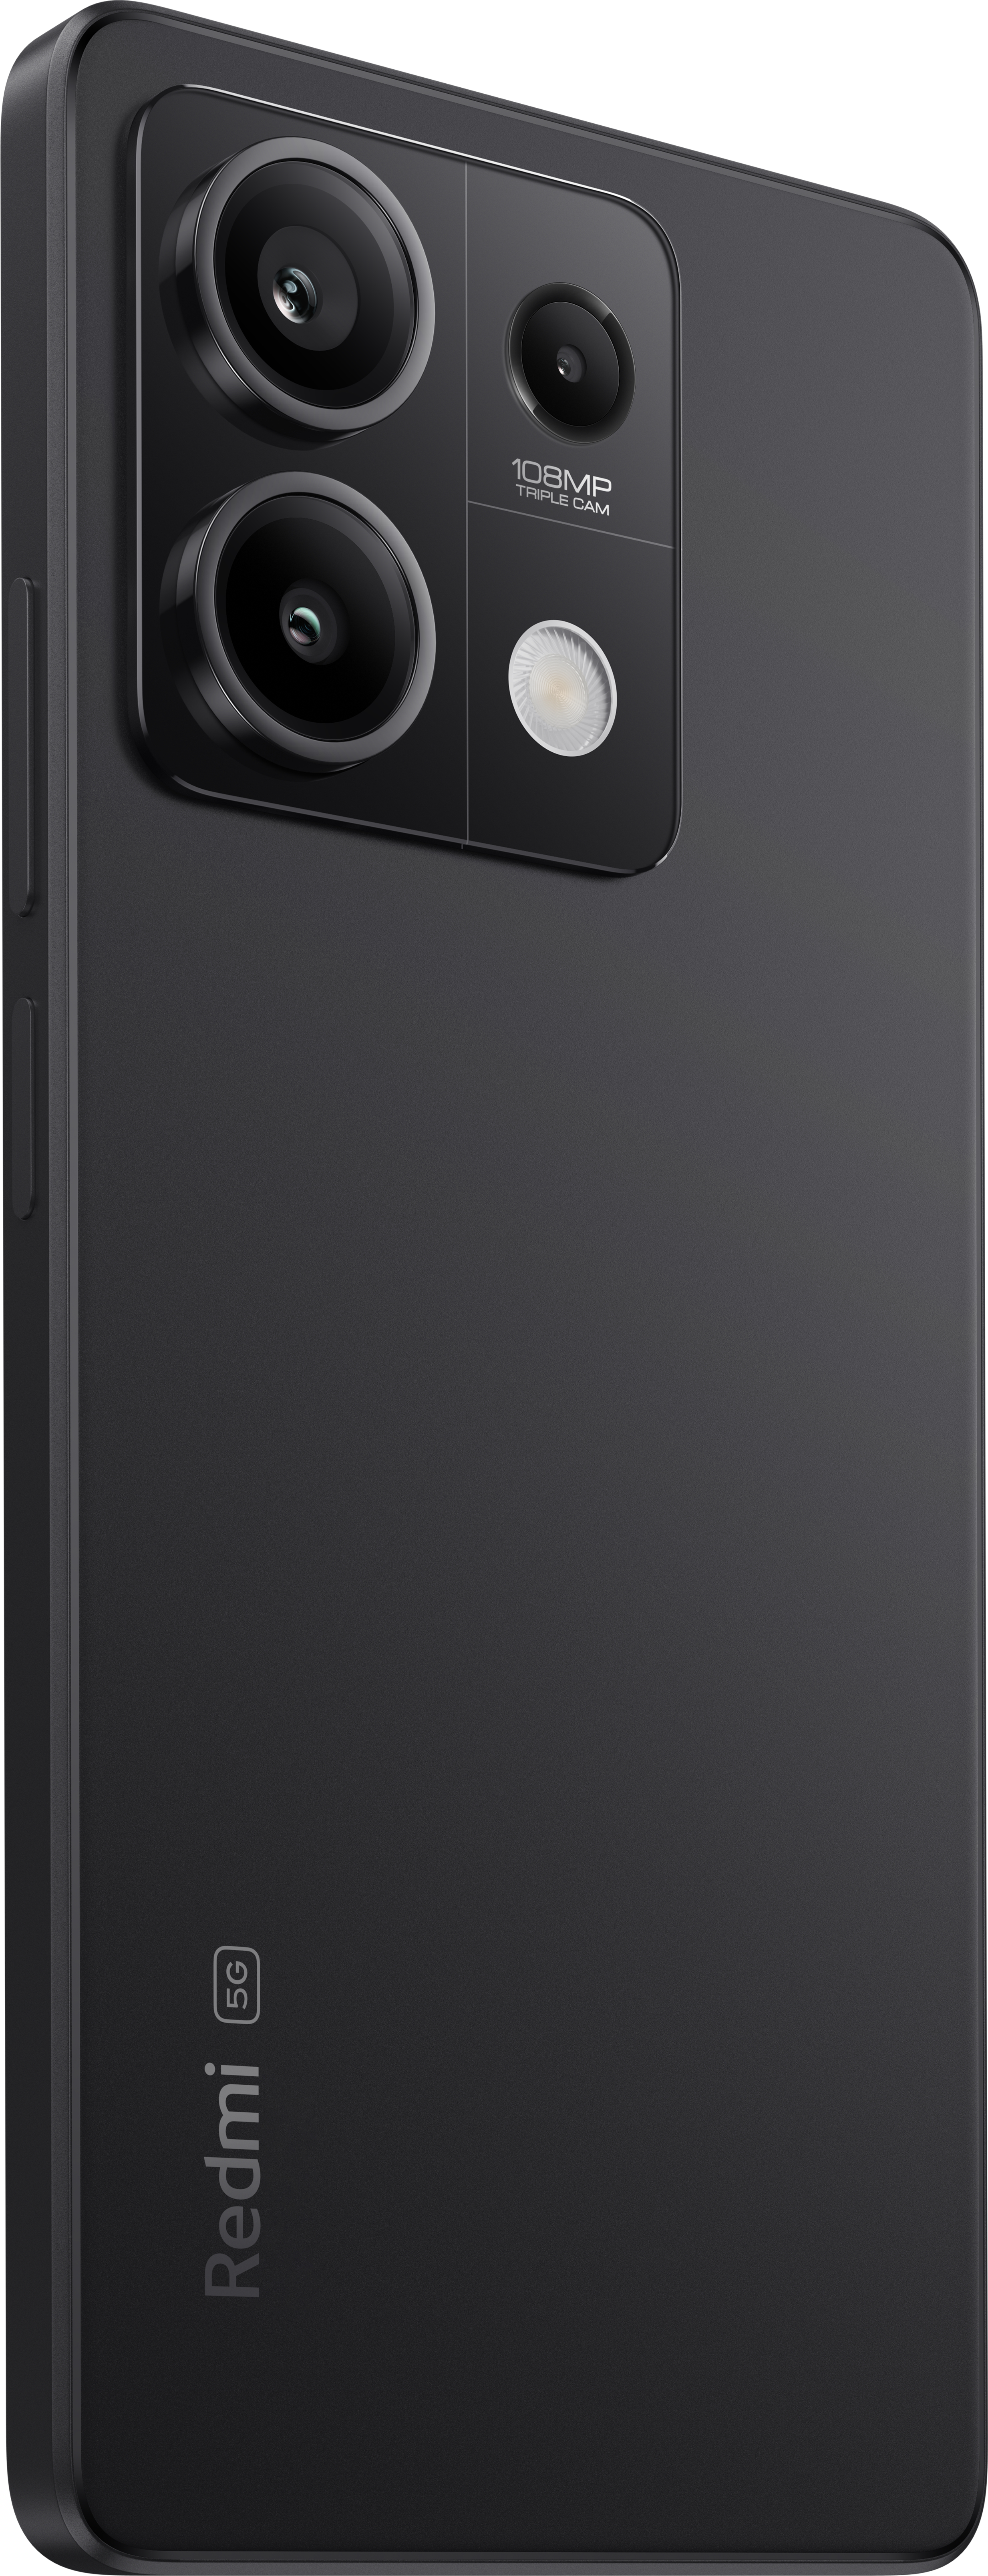 Dual 13 GB Graphite 5G Redmi Black 256 XIAOMI Note SIM